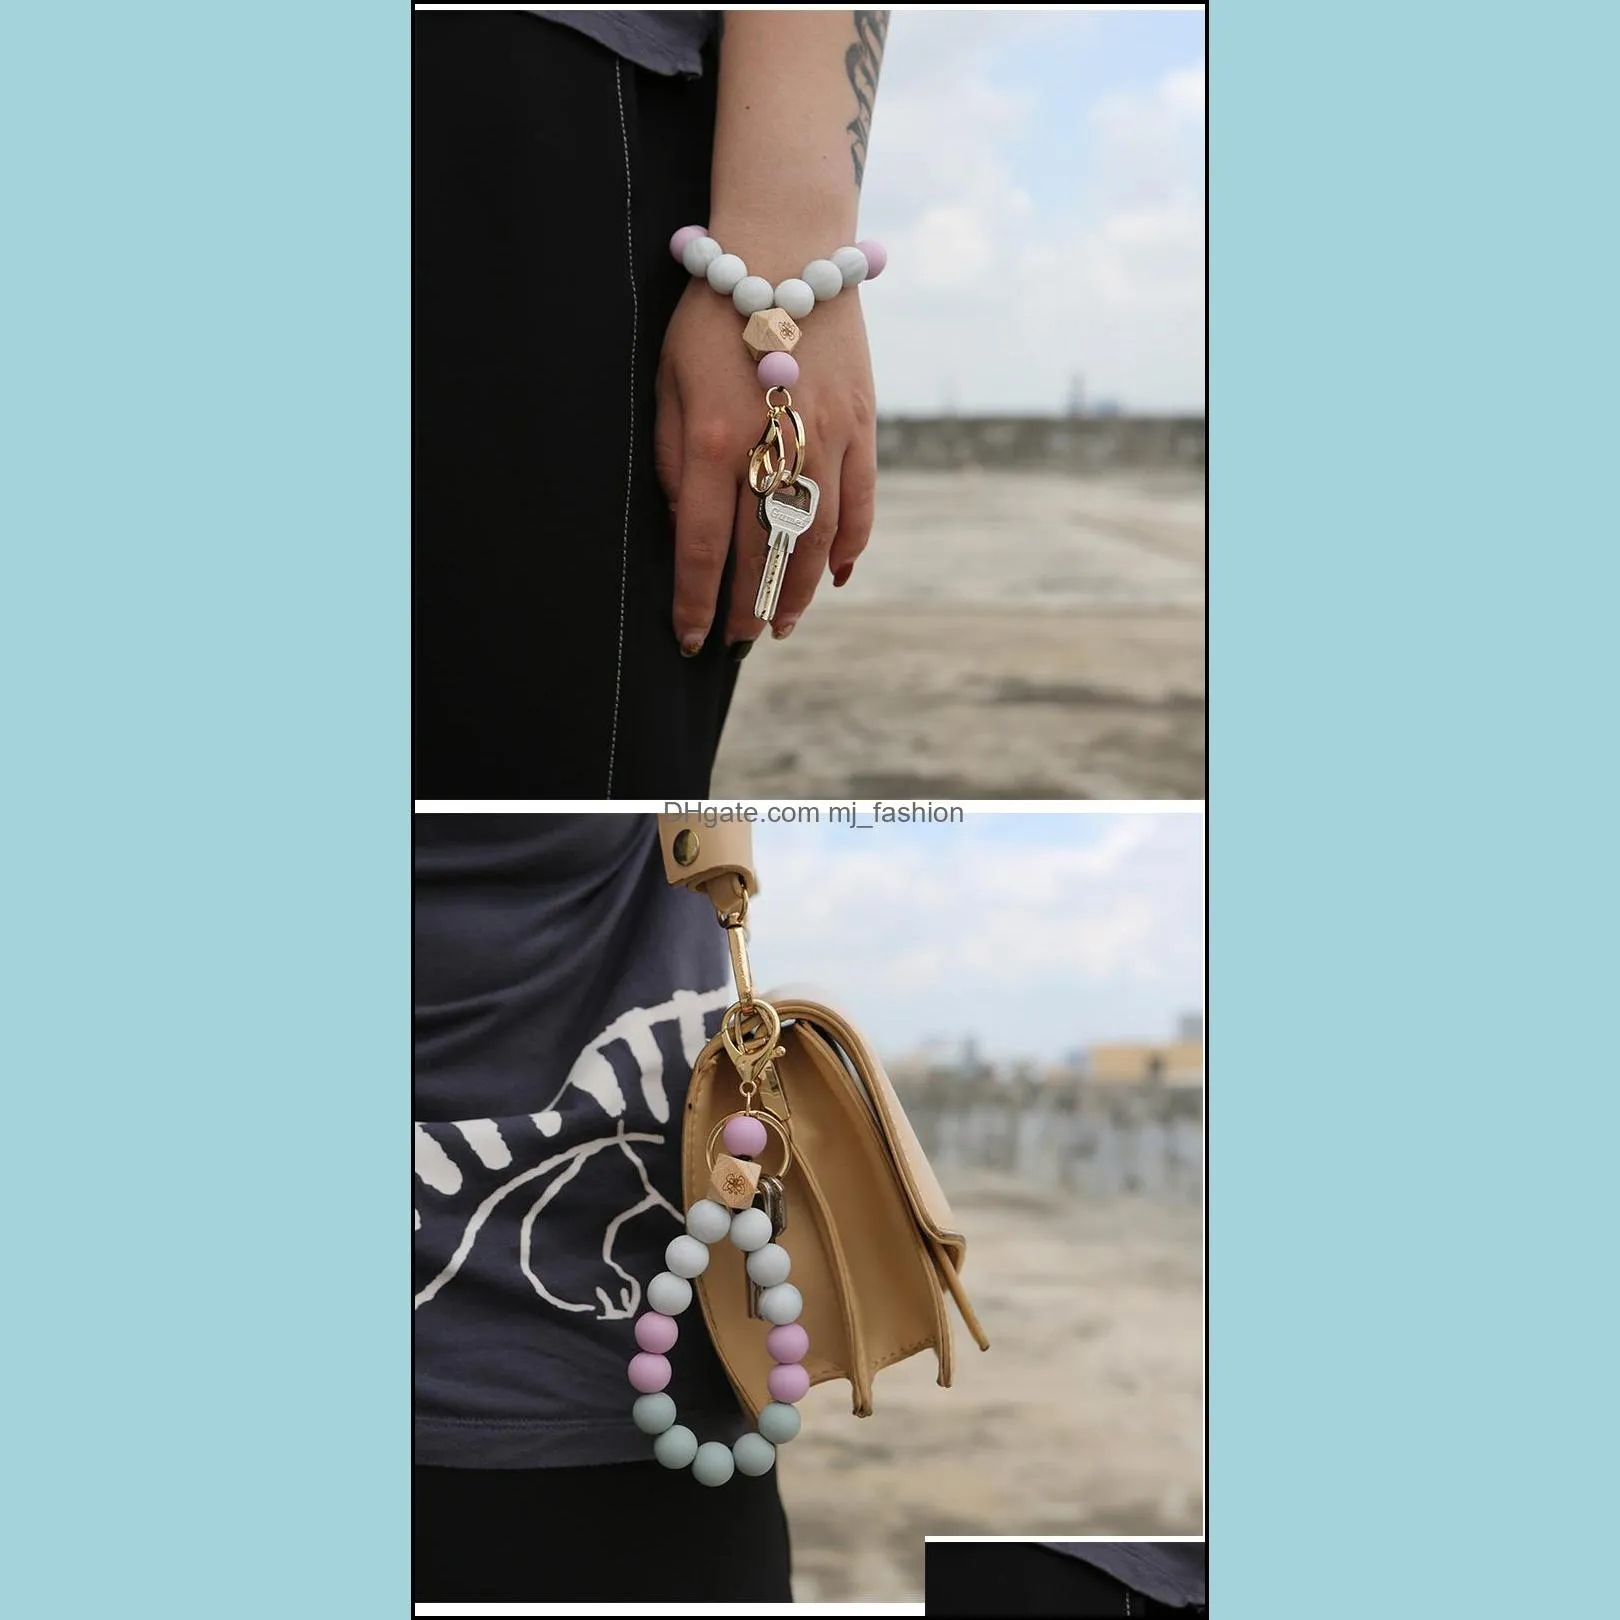 silicone bead strand bracelet key rins butterfly wood keychain wristband bangle cuff handbag hangs for women men fashion jewelry